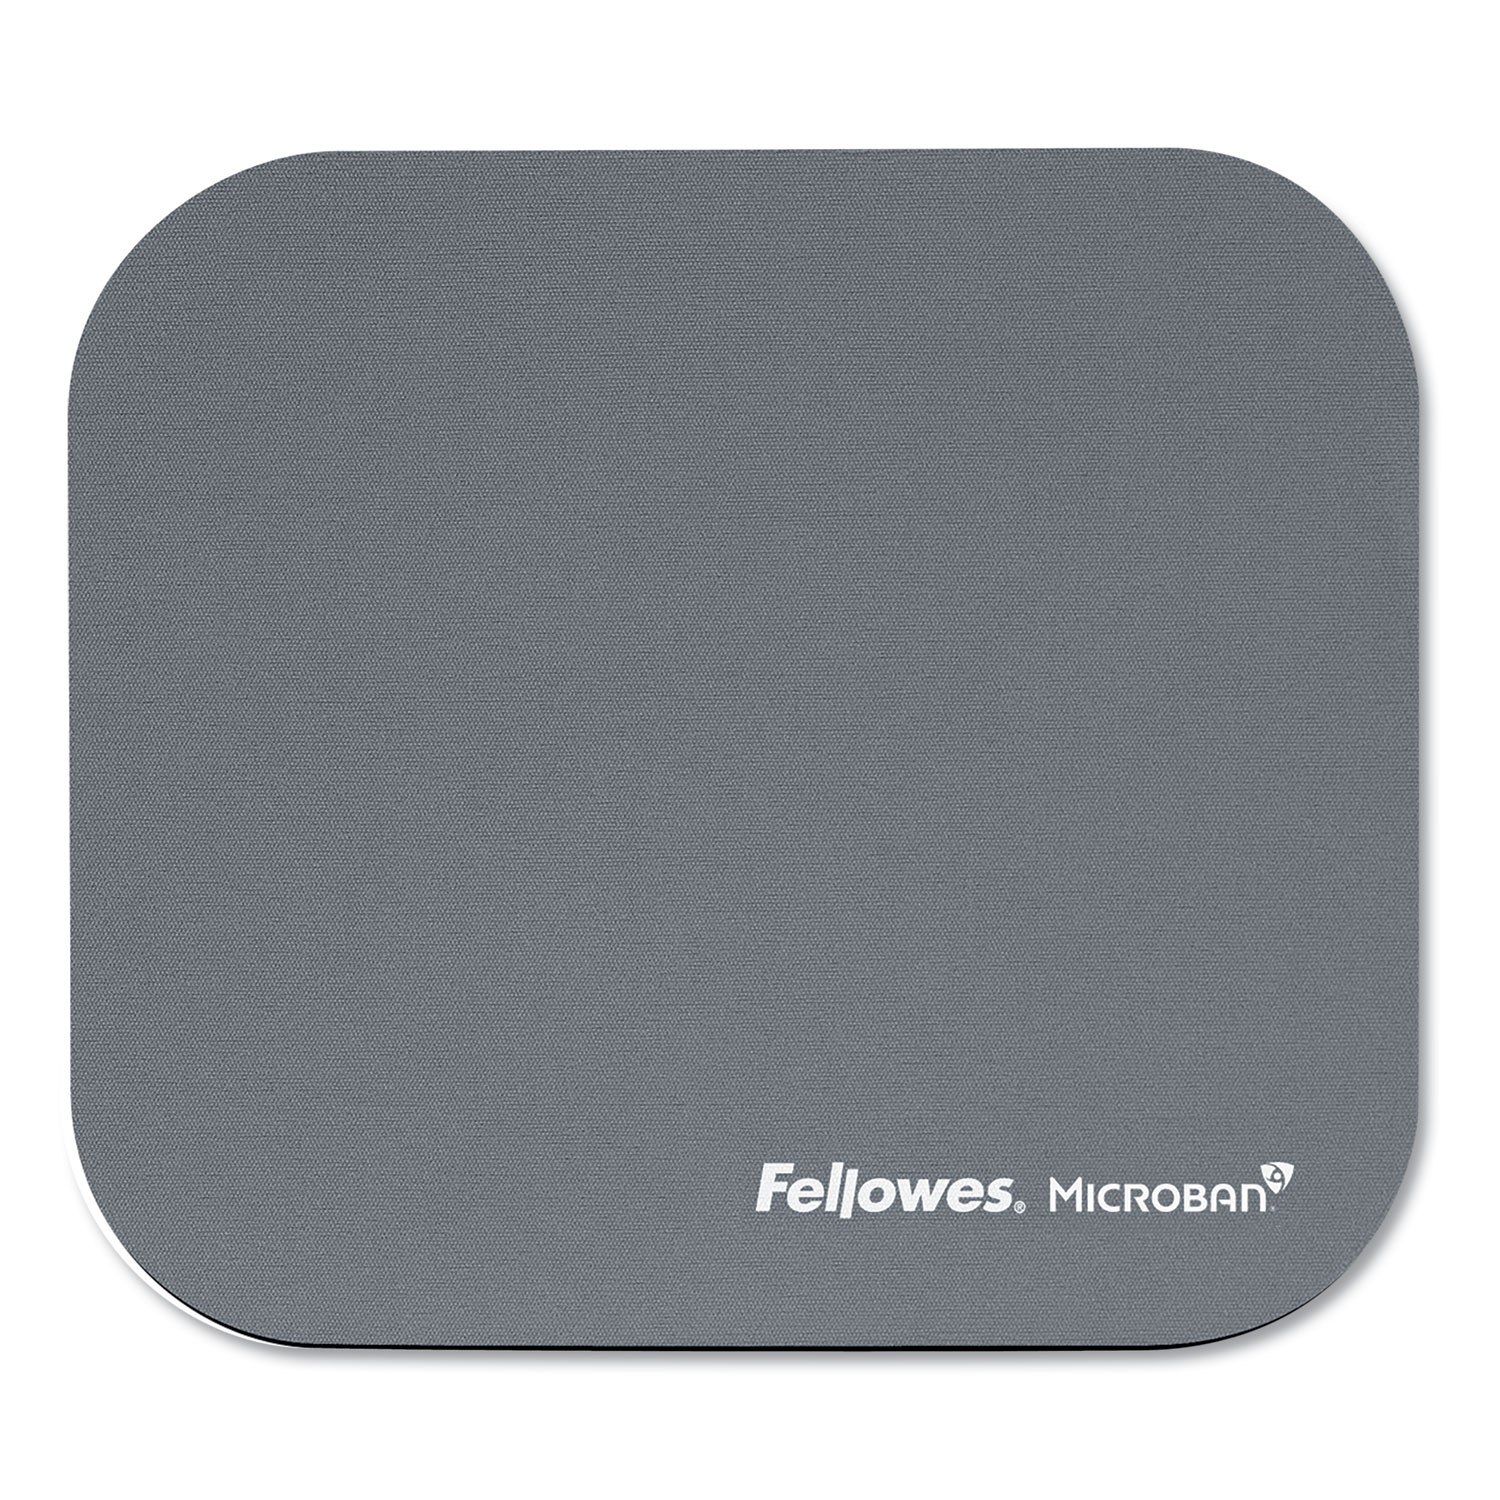  Fellowes 5934001 Mouse Pad w/Microban, Nonskid Base, 9 x 8, Graphite (FEL5934001) 